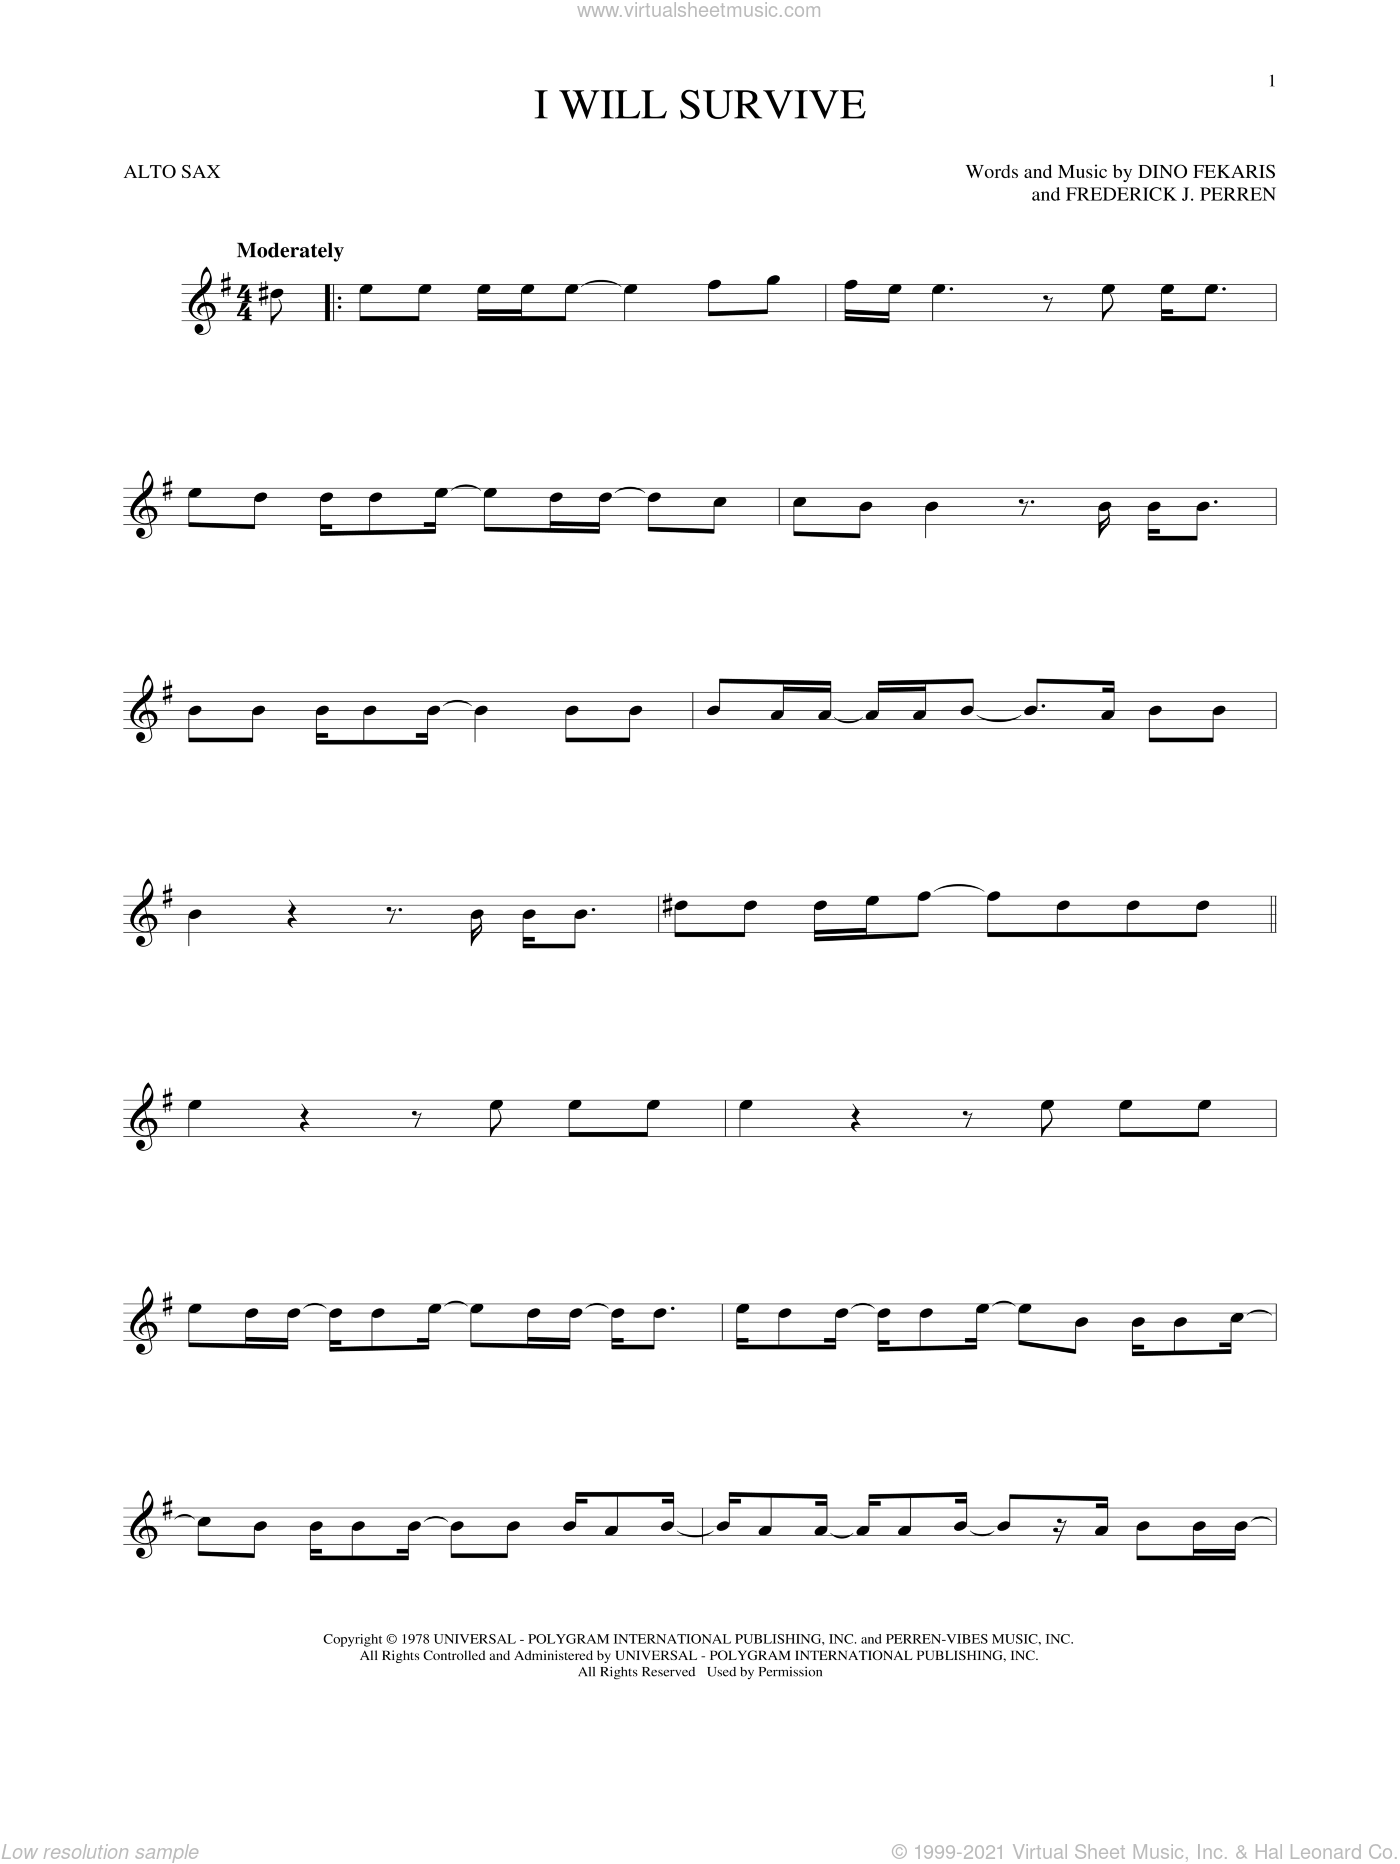 Wonderbaarlijk Gaynor - I Will Survive sheet music for alto saxophone solo [PDF] GP-75